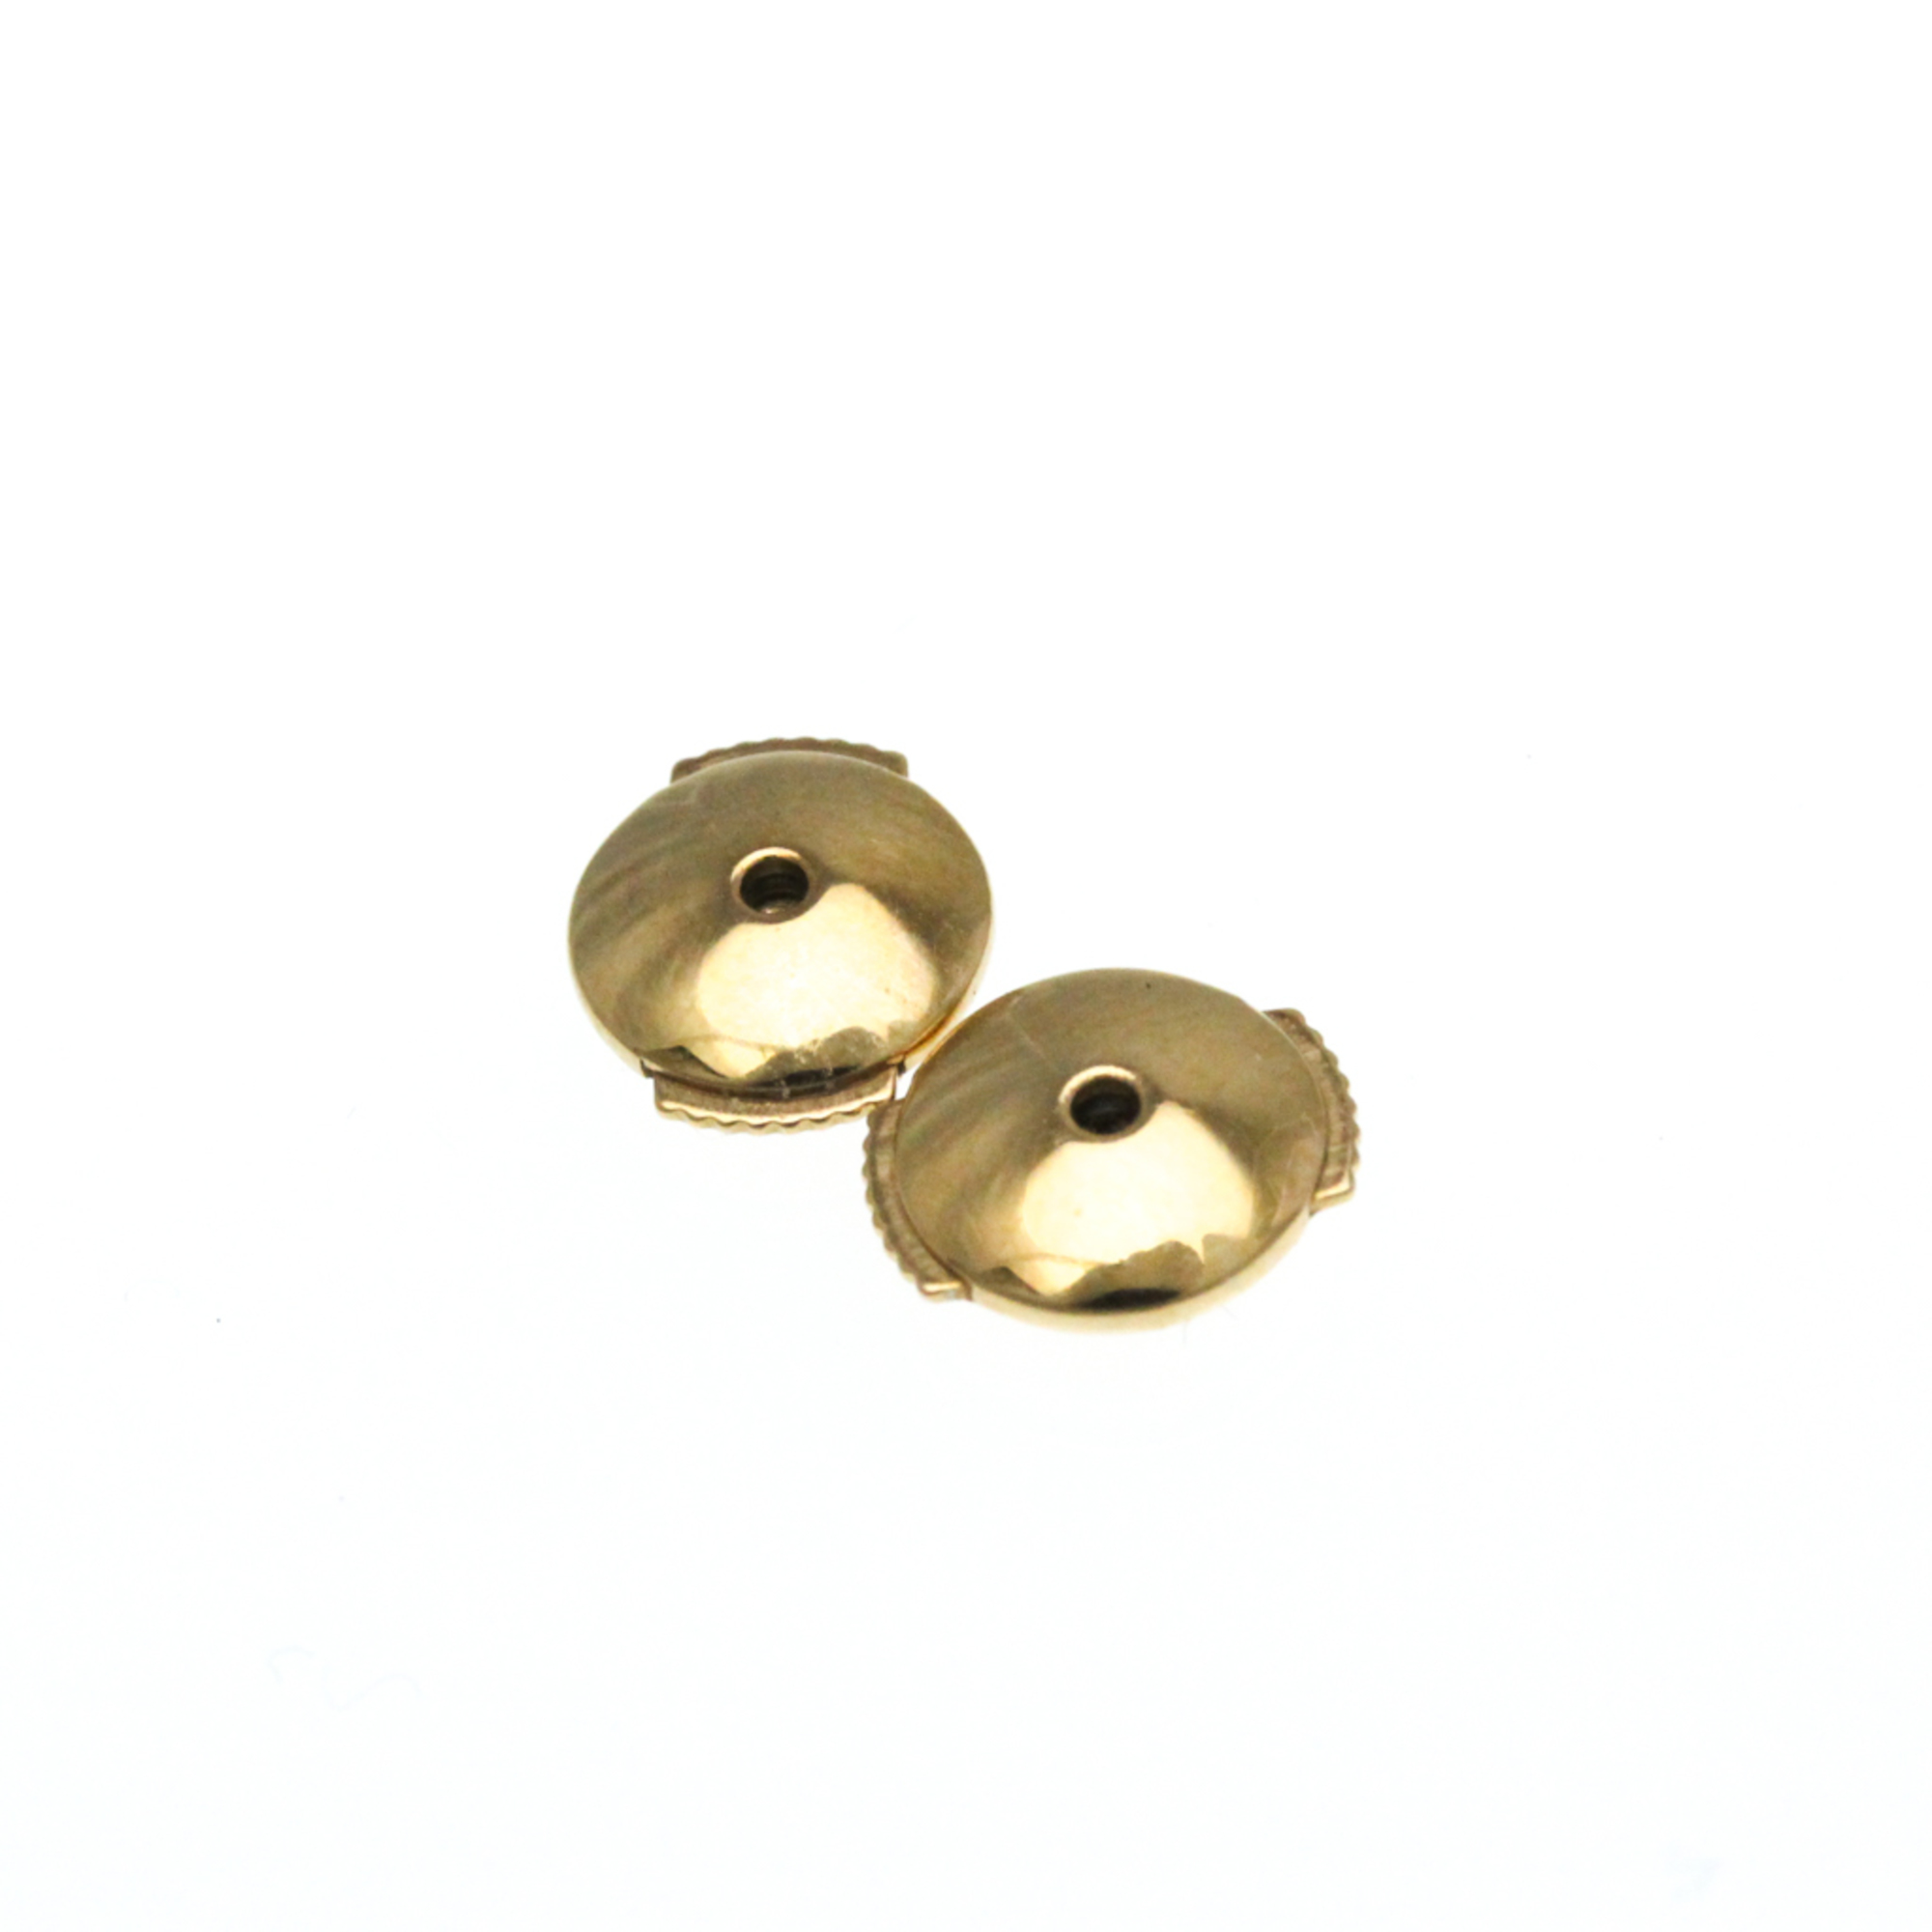 Cartier Trinity De Cartier Diamond Pink Gold (18K),White Gold (18K),Yellow Gold (18K) Drop Earrings Gold